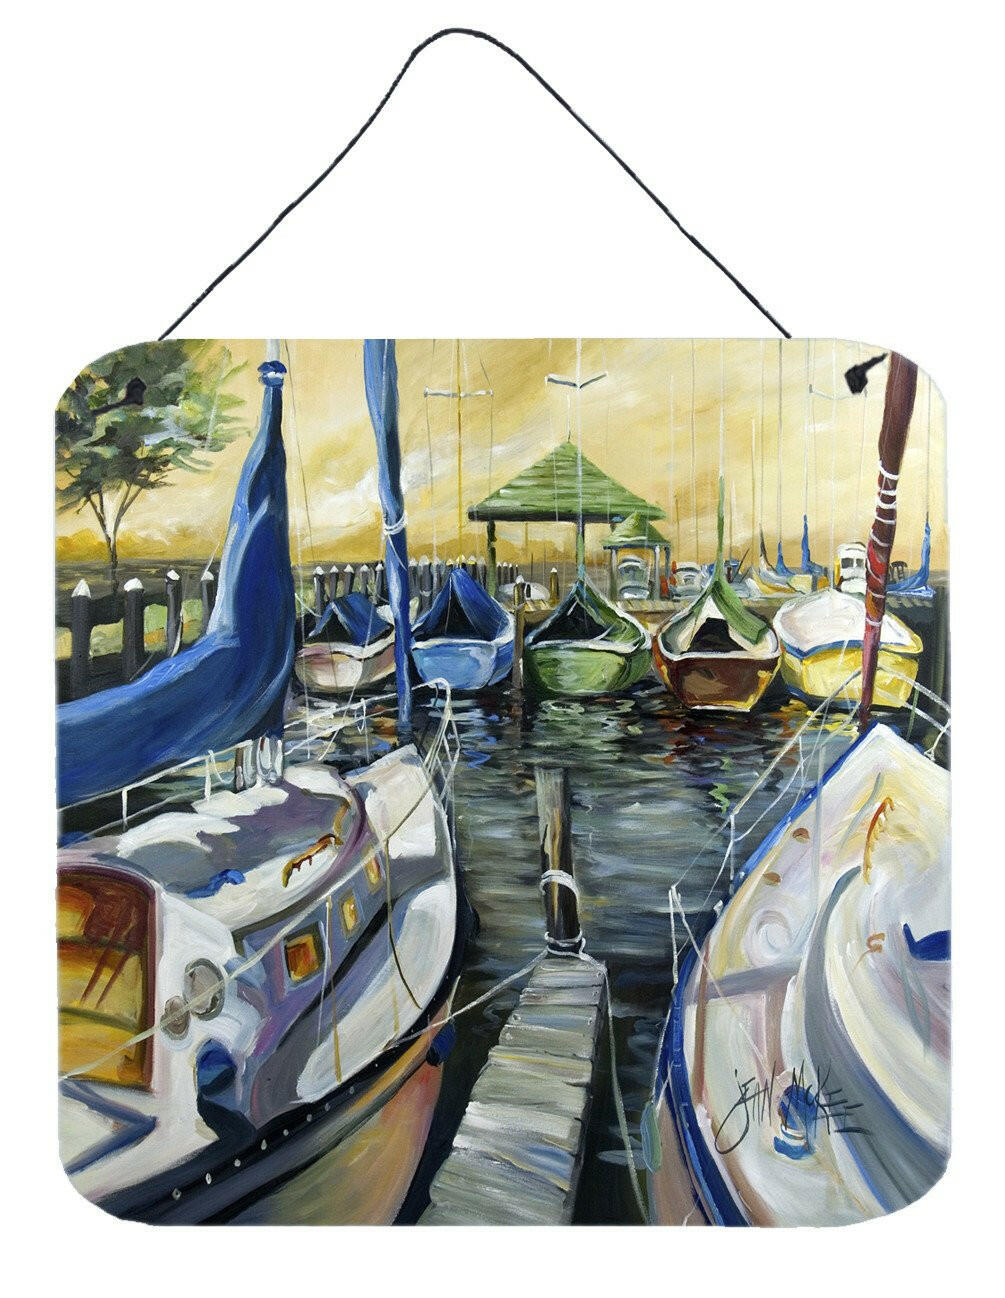 Seven Boats Sailboats Wall or Door Hanging Prints JMK1231DS66 by Caroline's Treasures